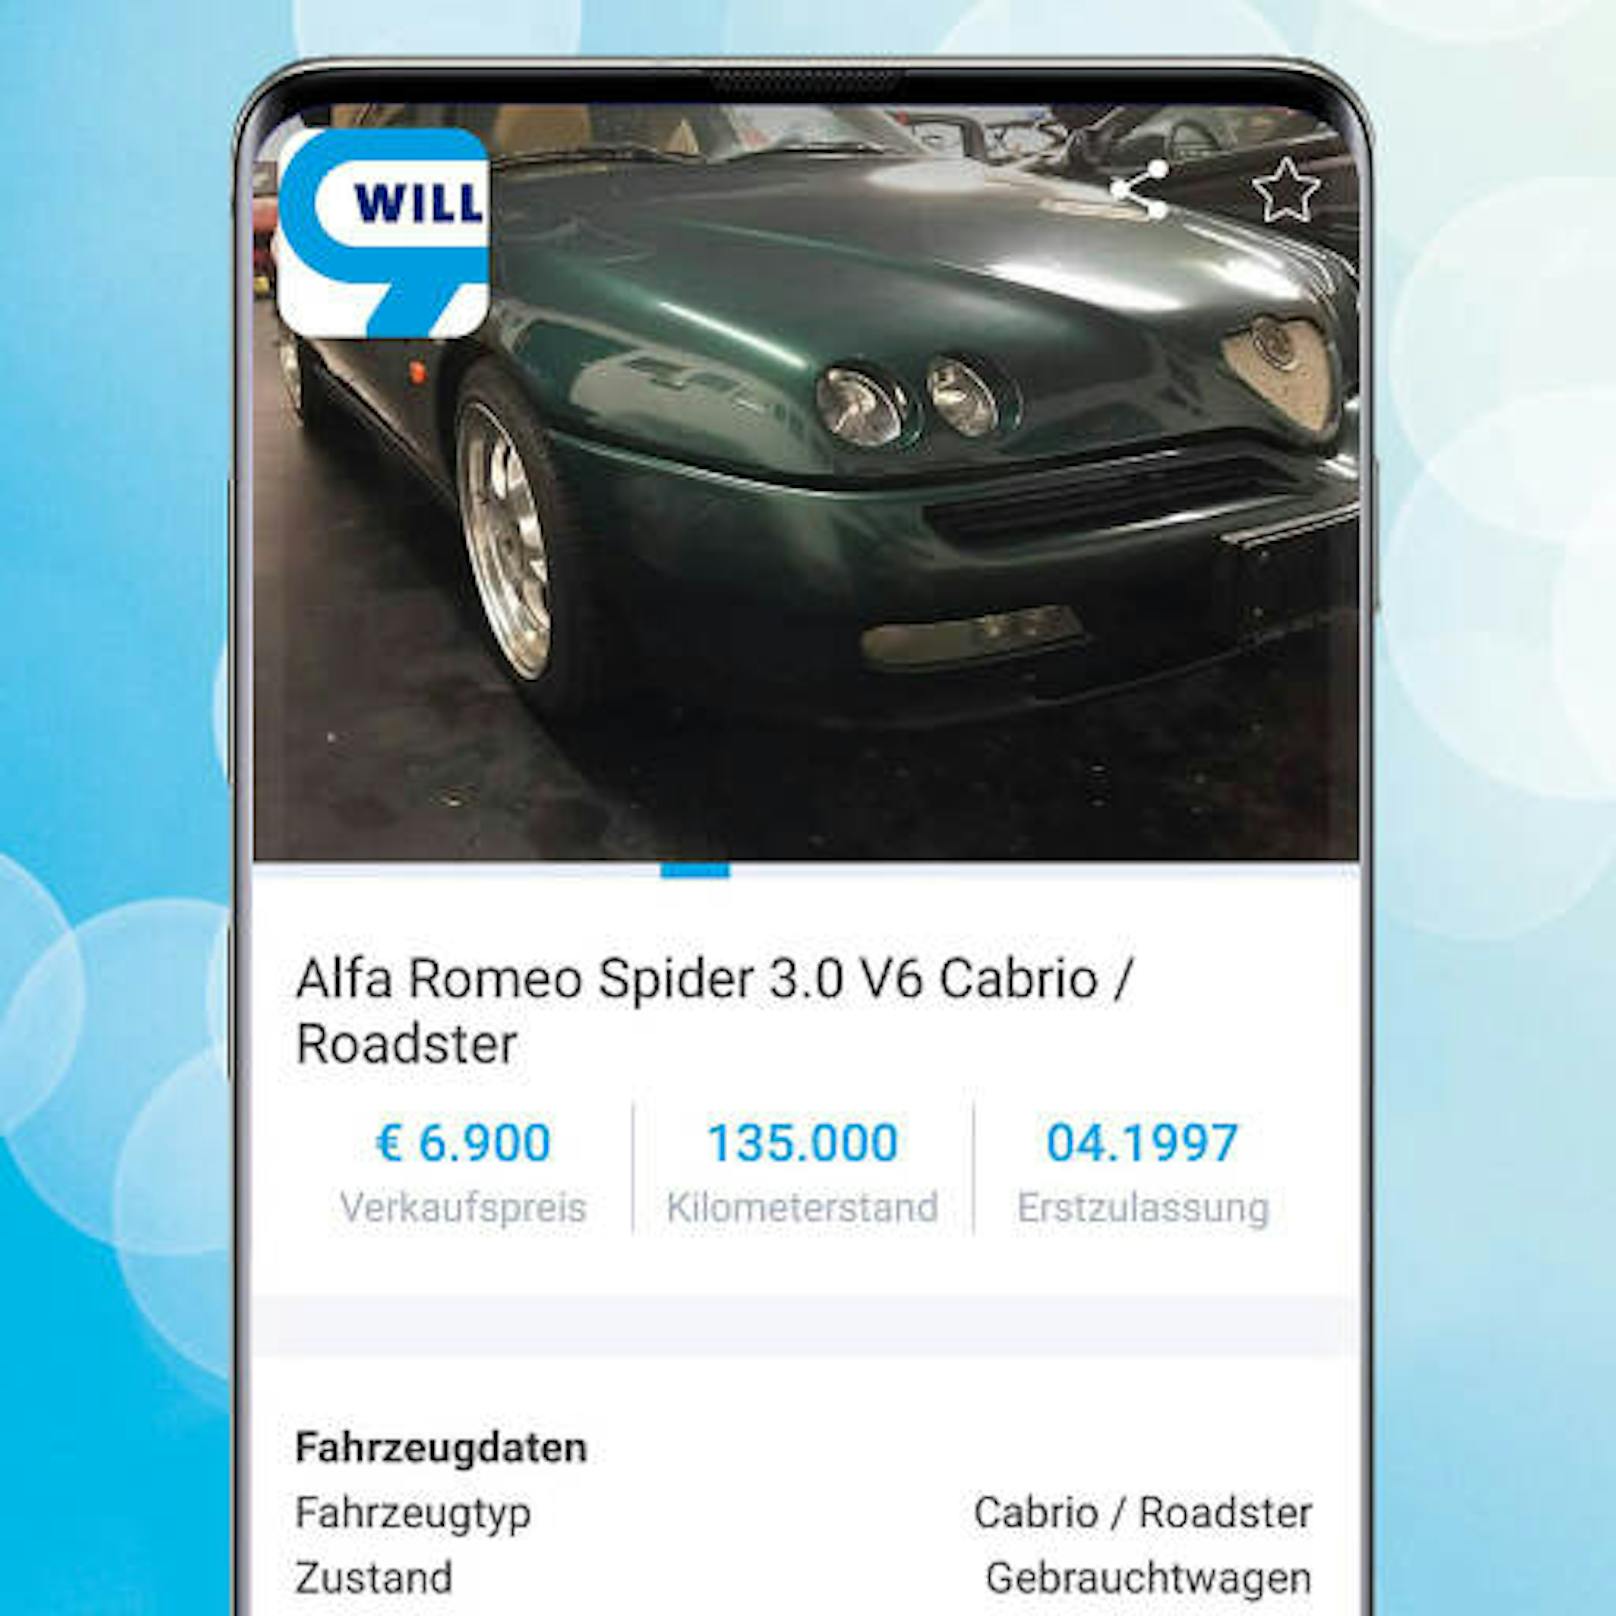 Der Alfa Romeo Spider 3.0 Cabrio/ Roadster